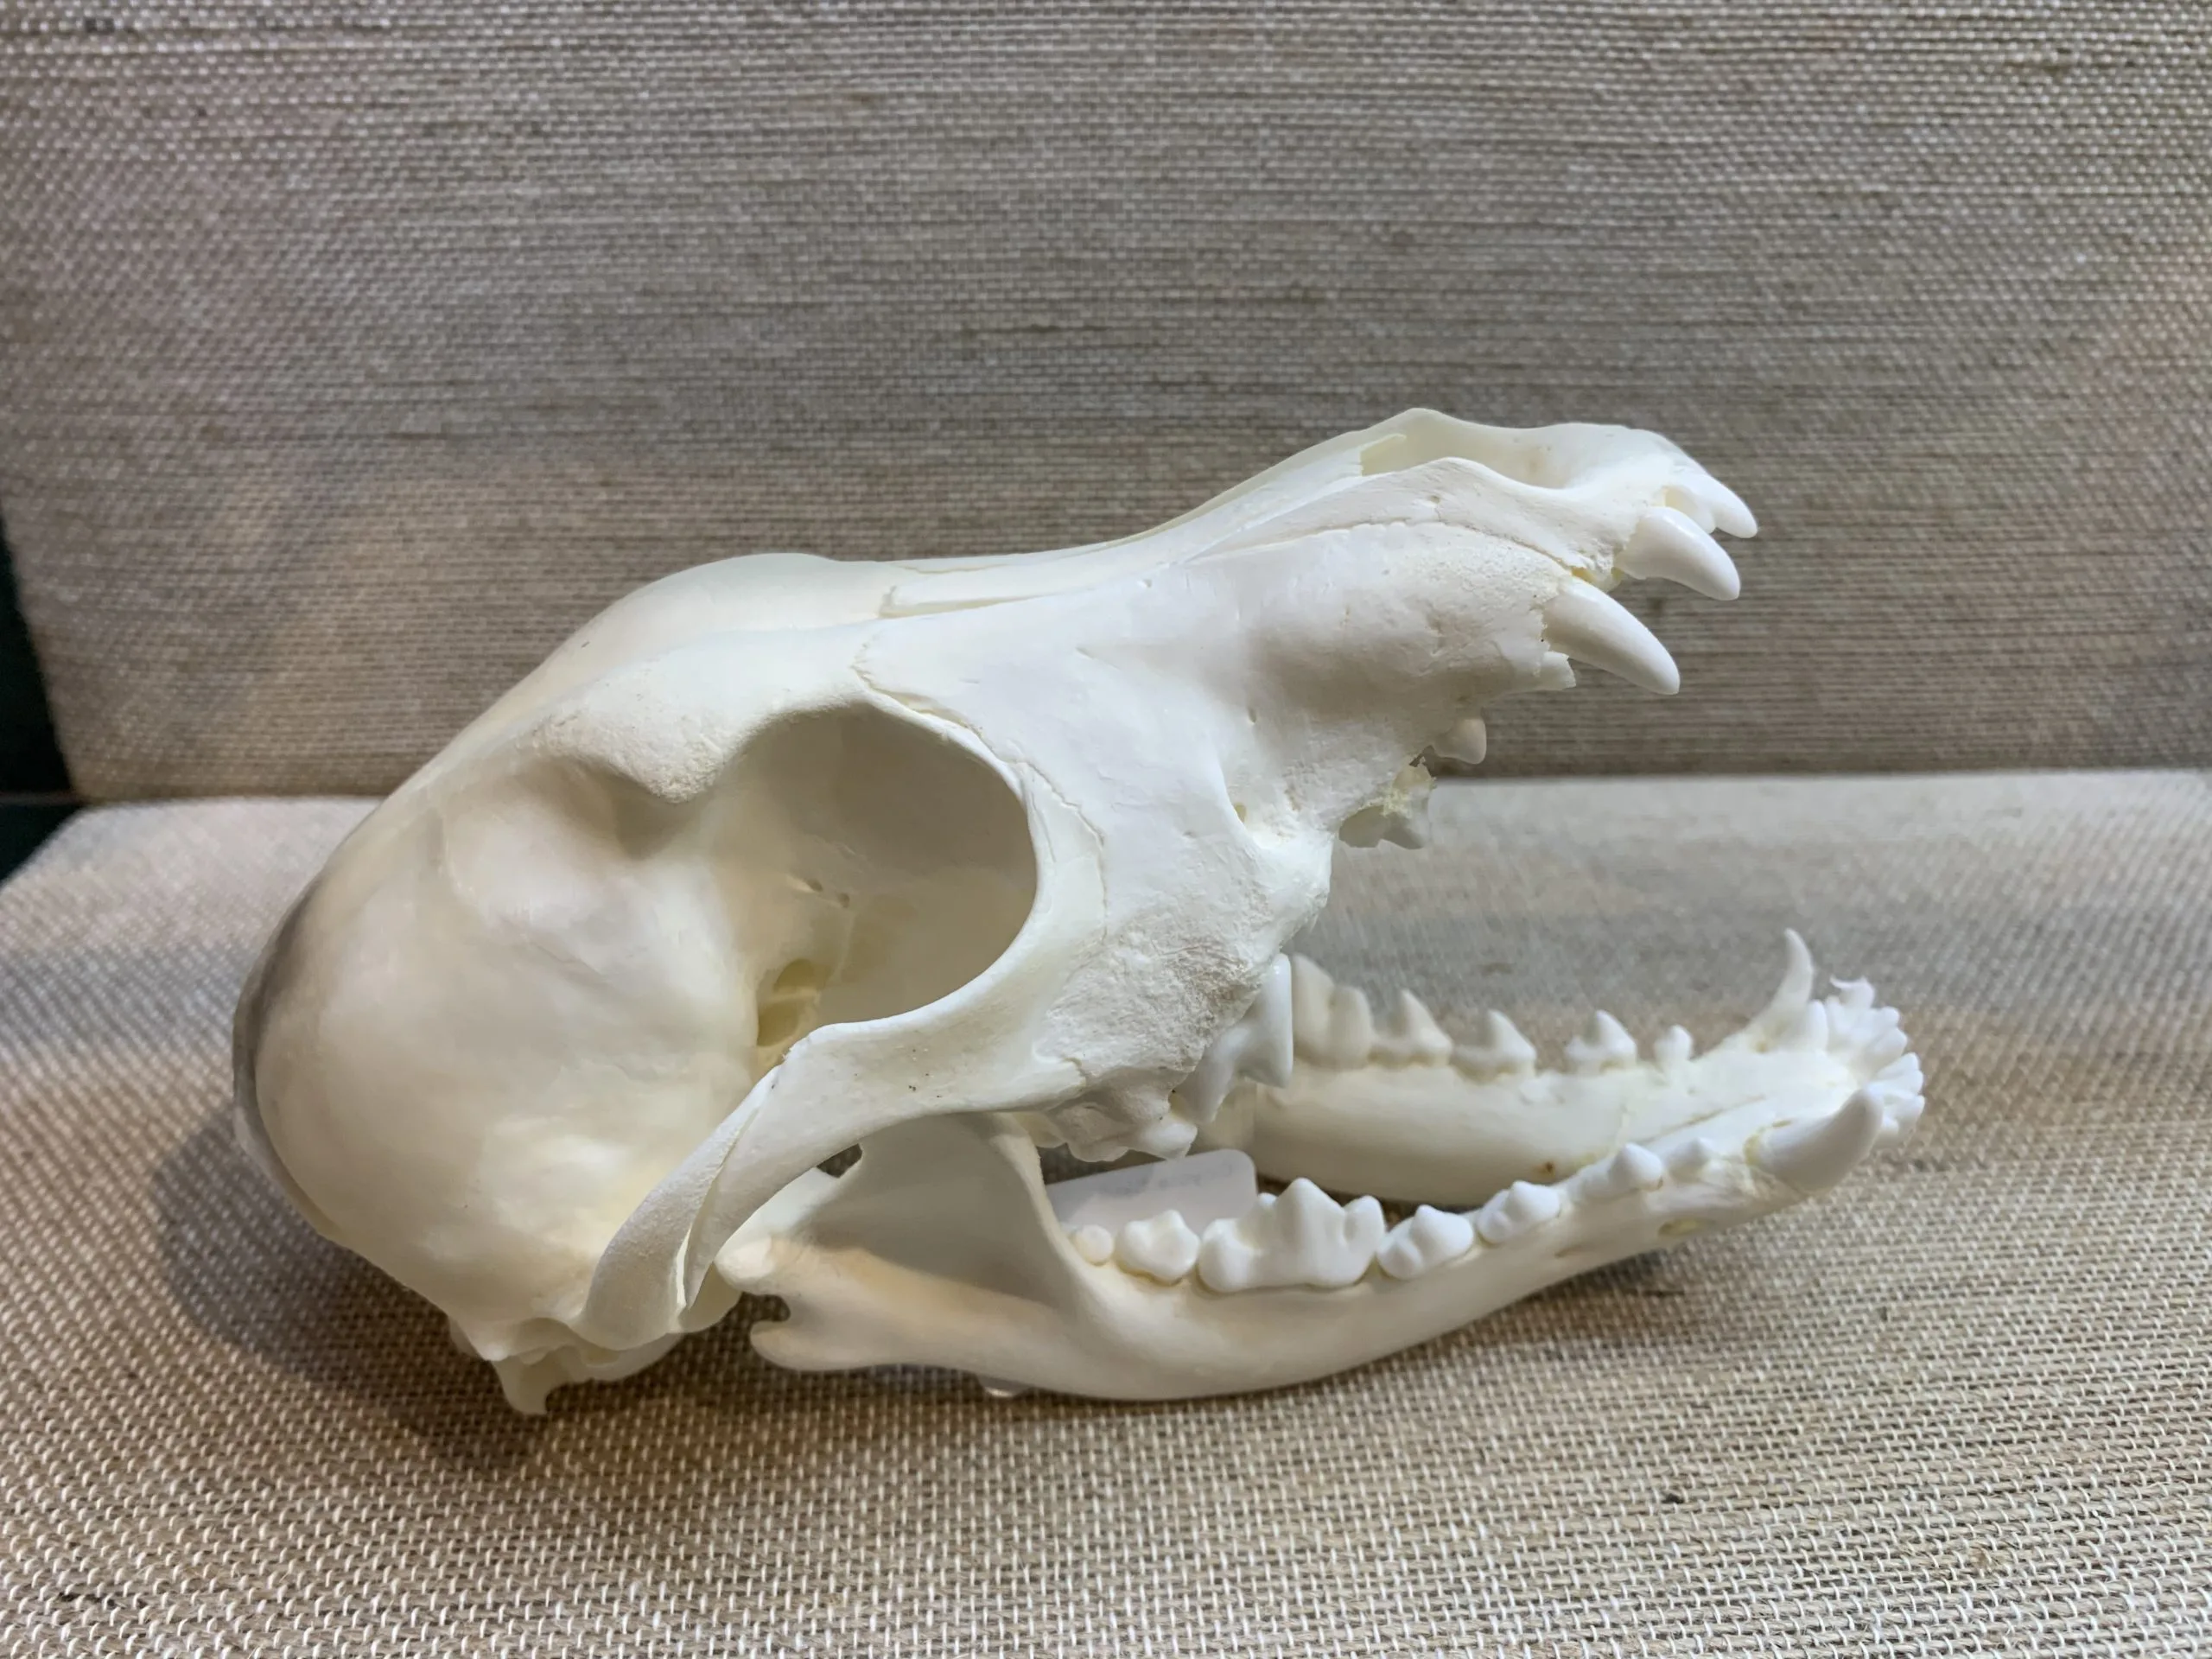 coyote skull